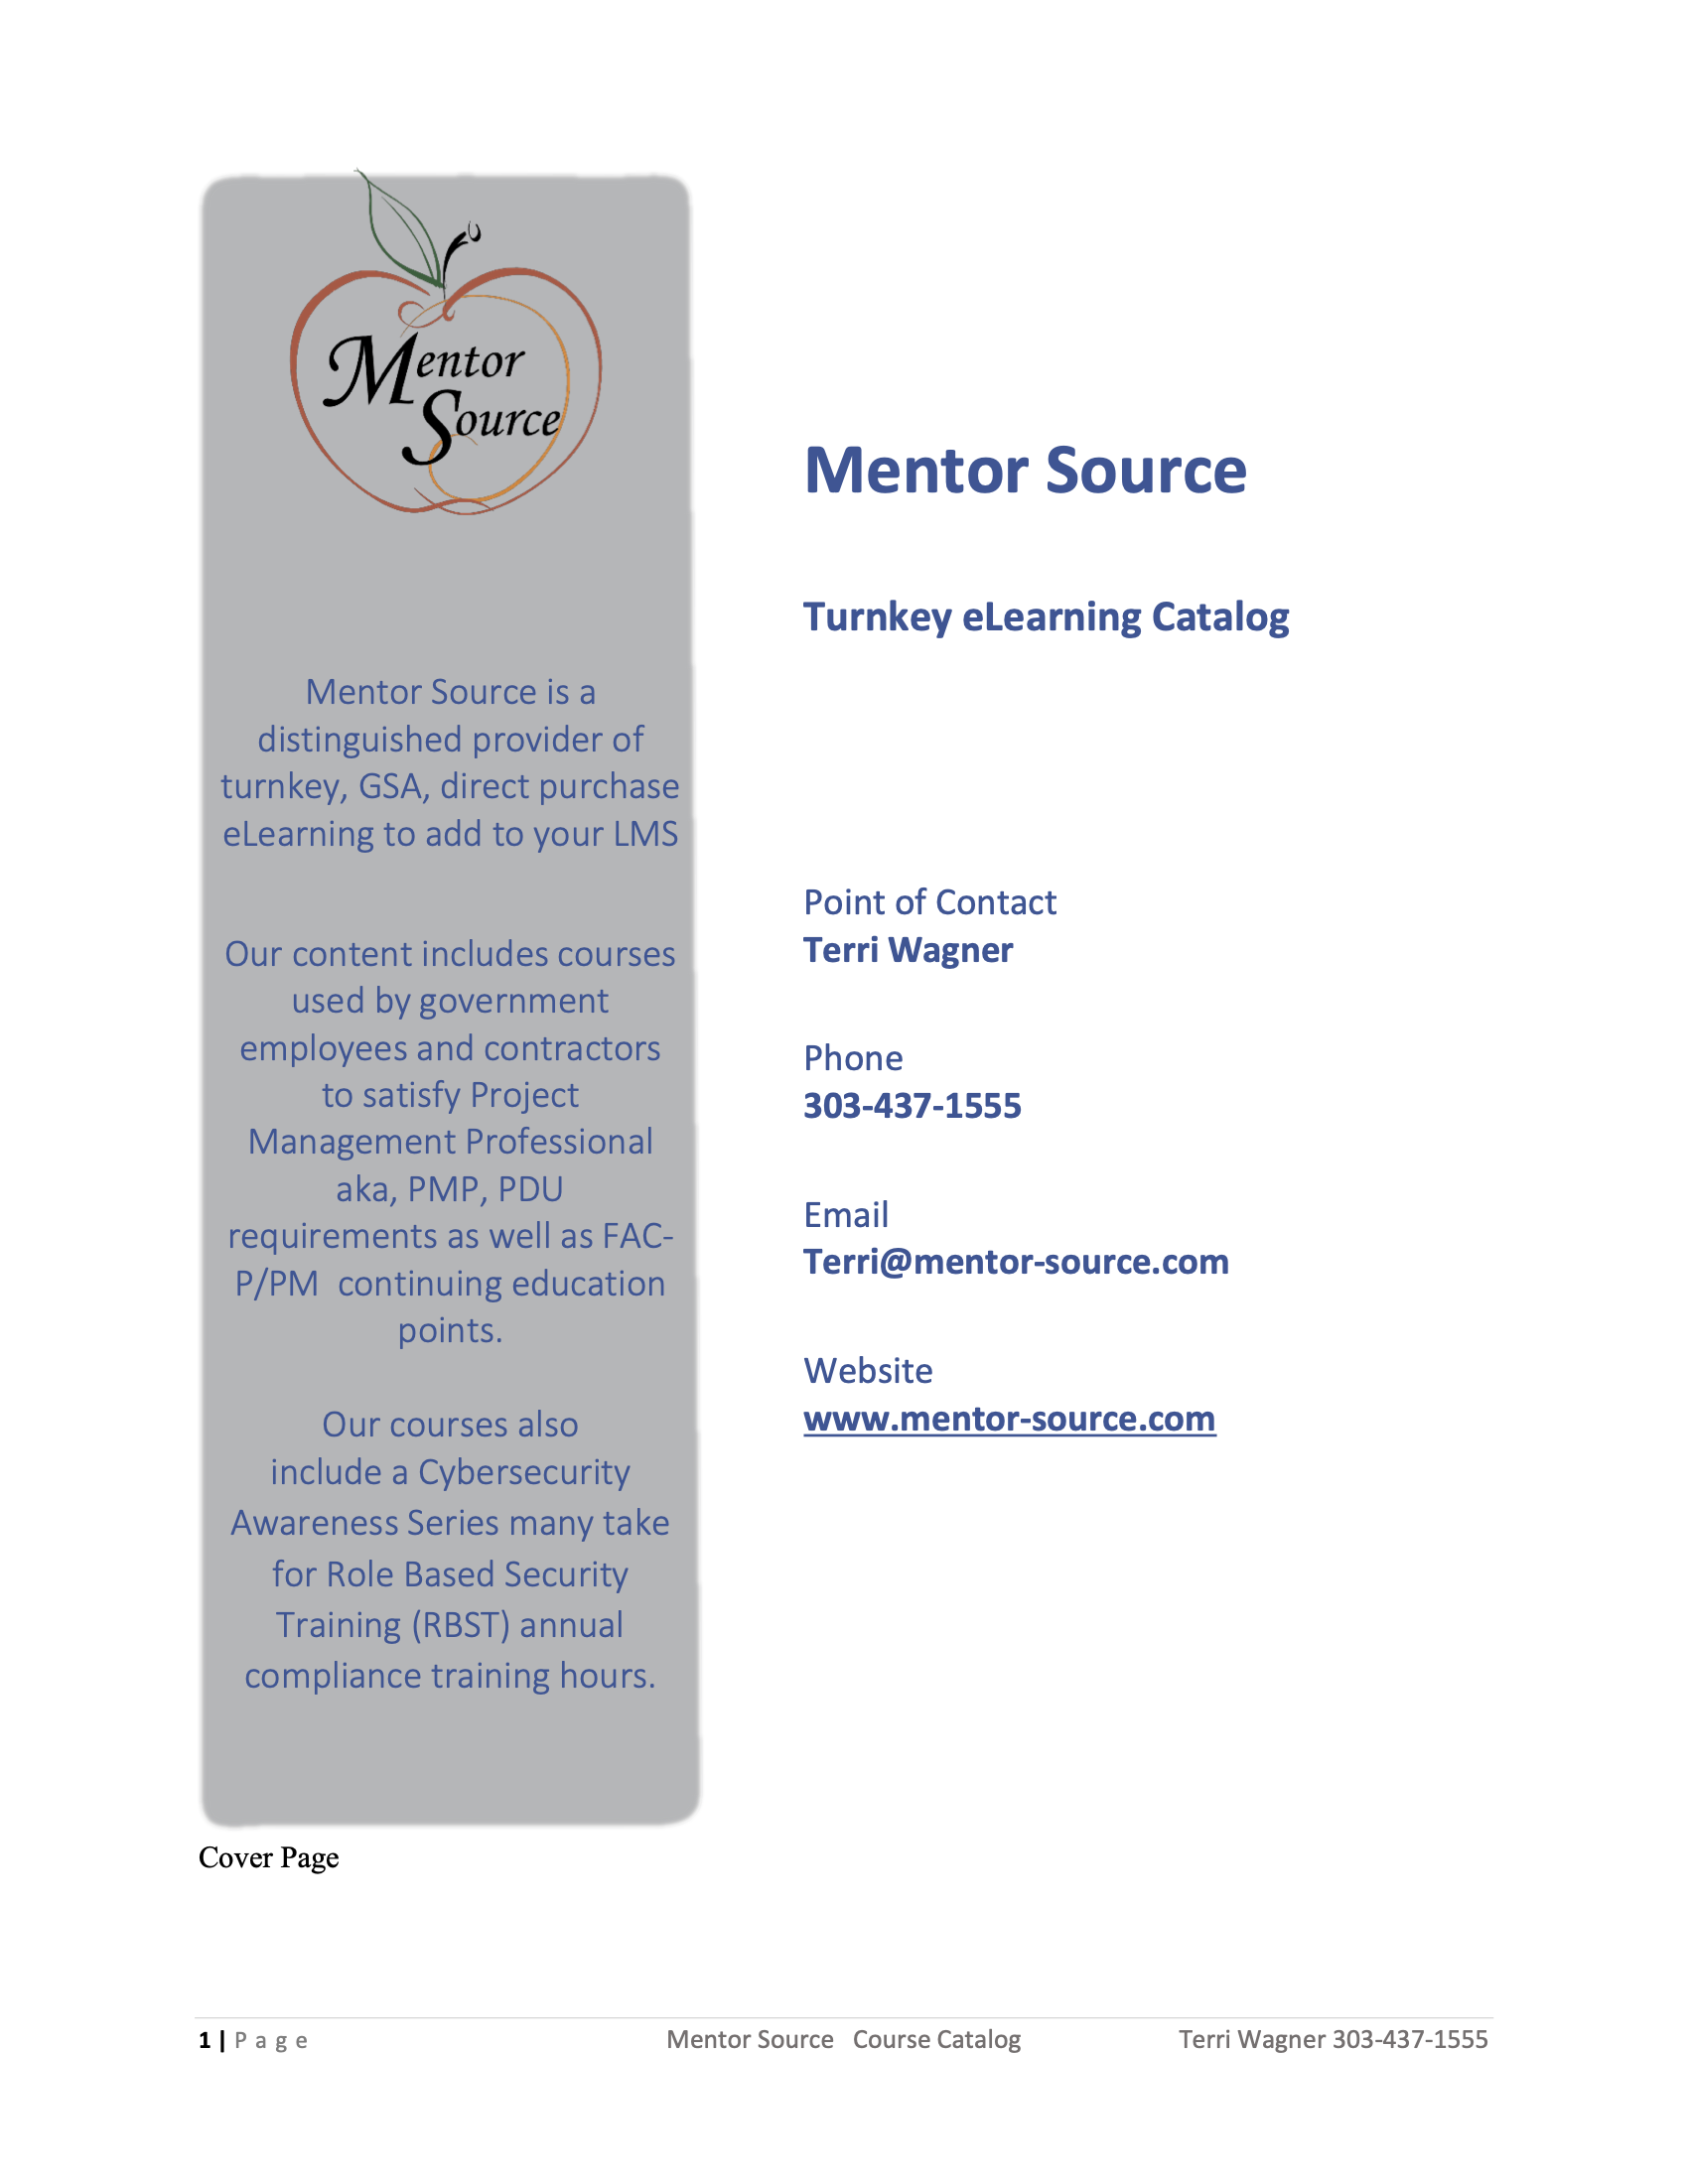 Mentor Source Course Catalog